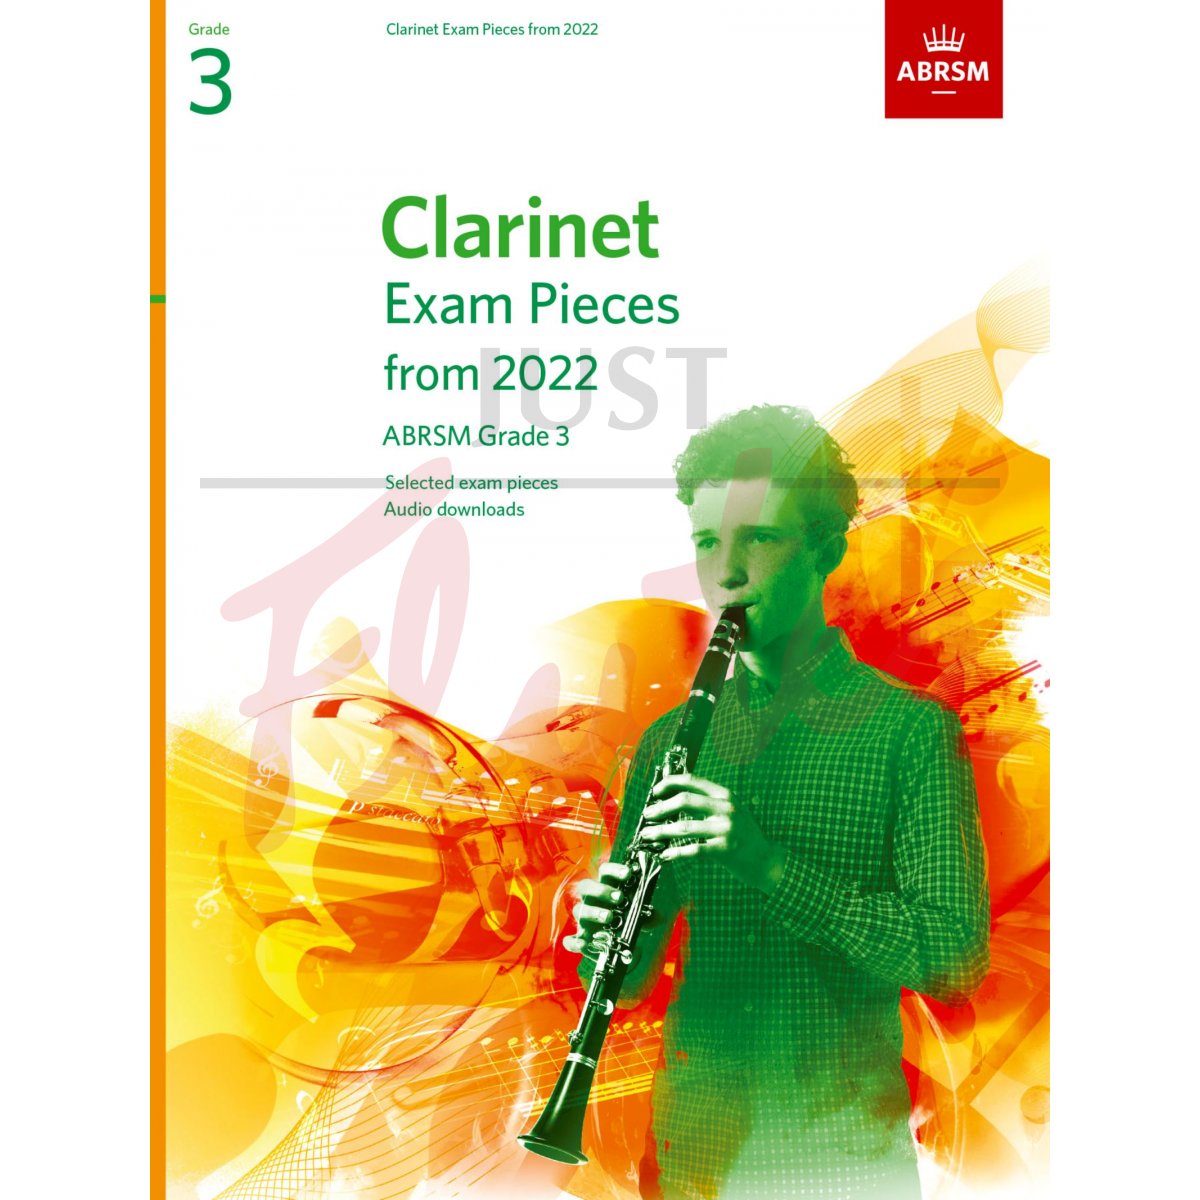 Clarinet Exam Pieces from 2022 Grade 3